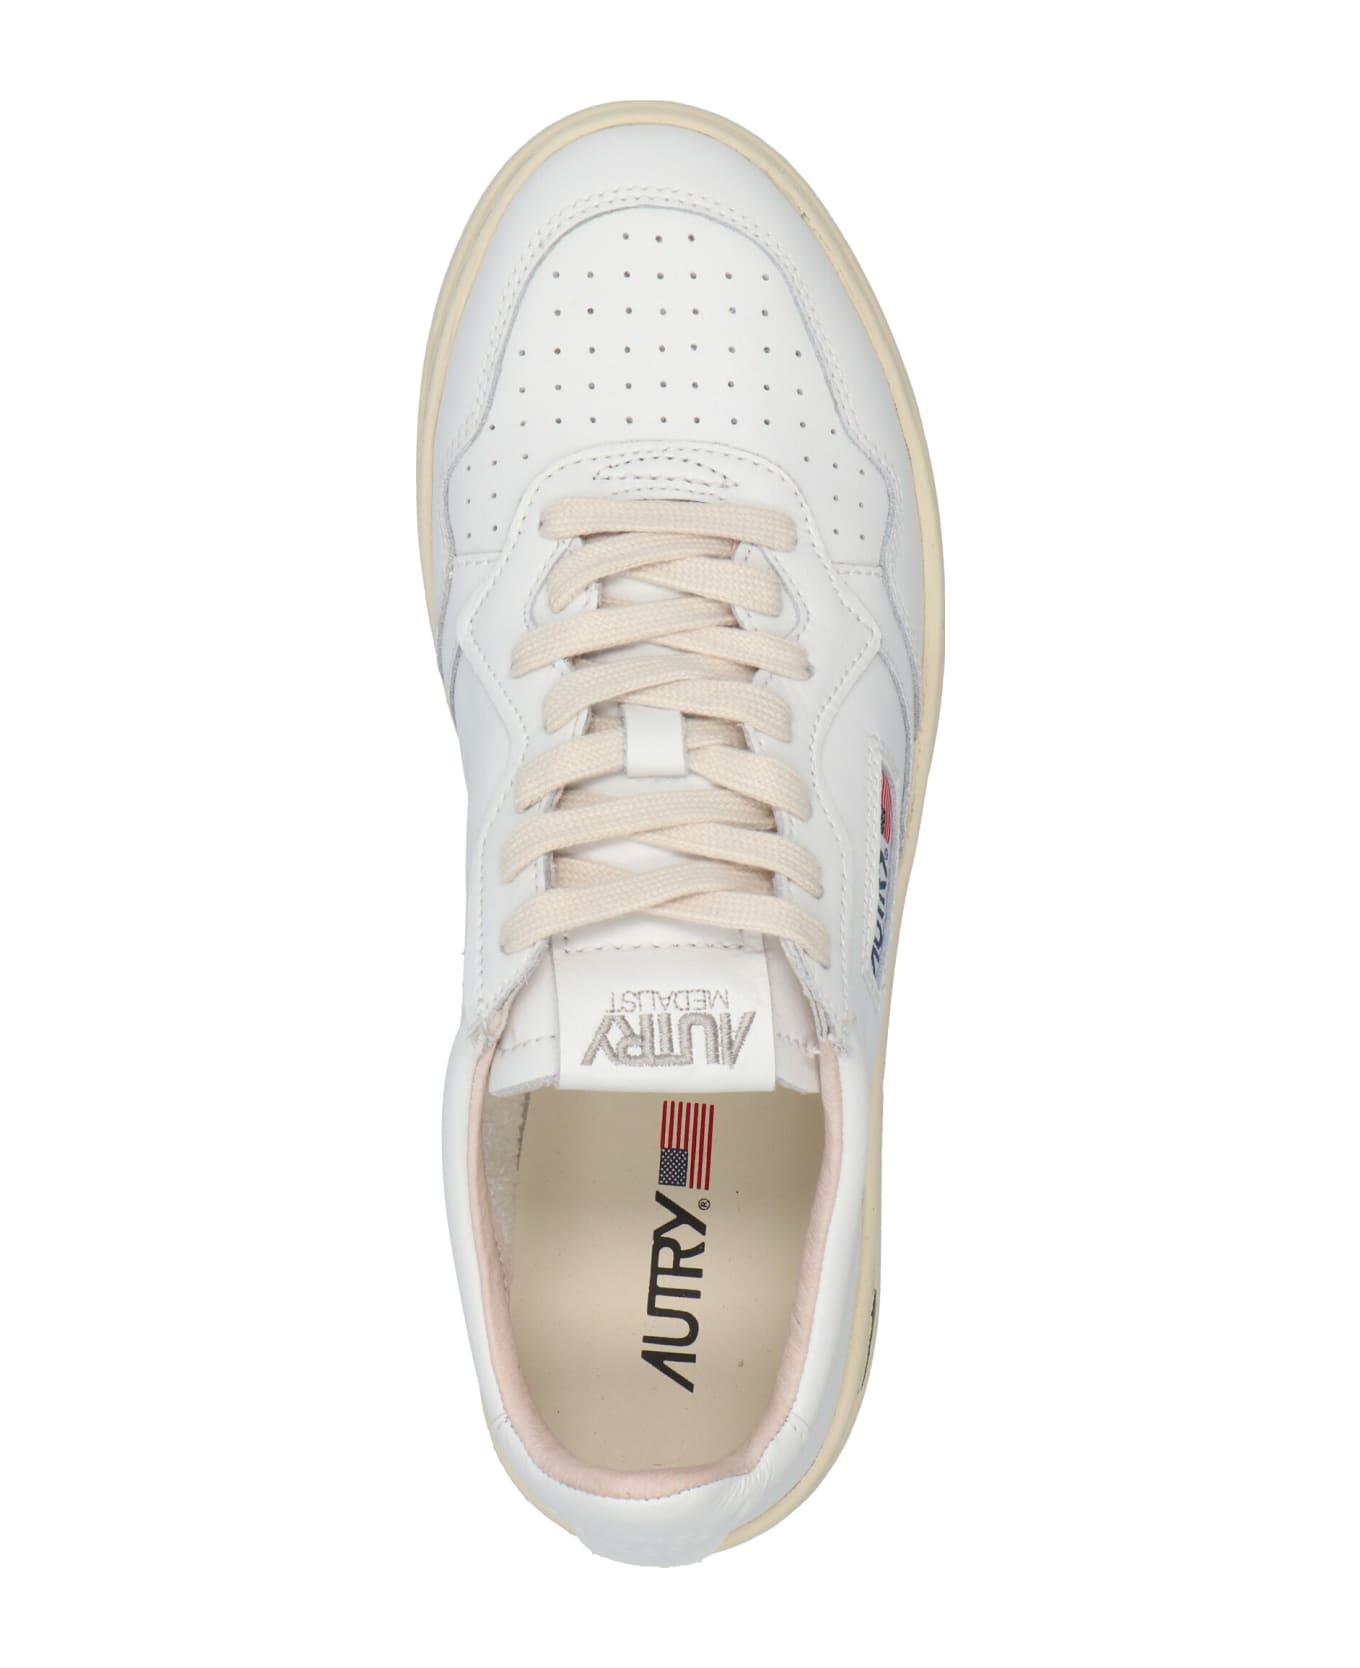 Autry Medalist Sneakers Aulm Ld06 - White スニーカー